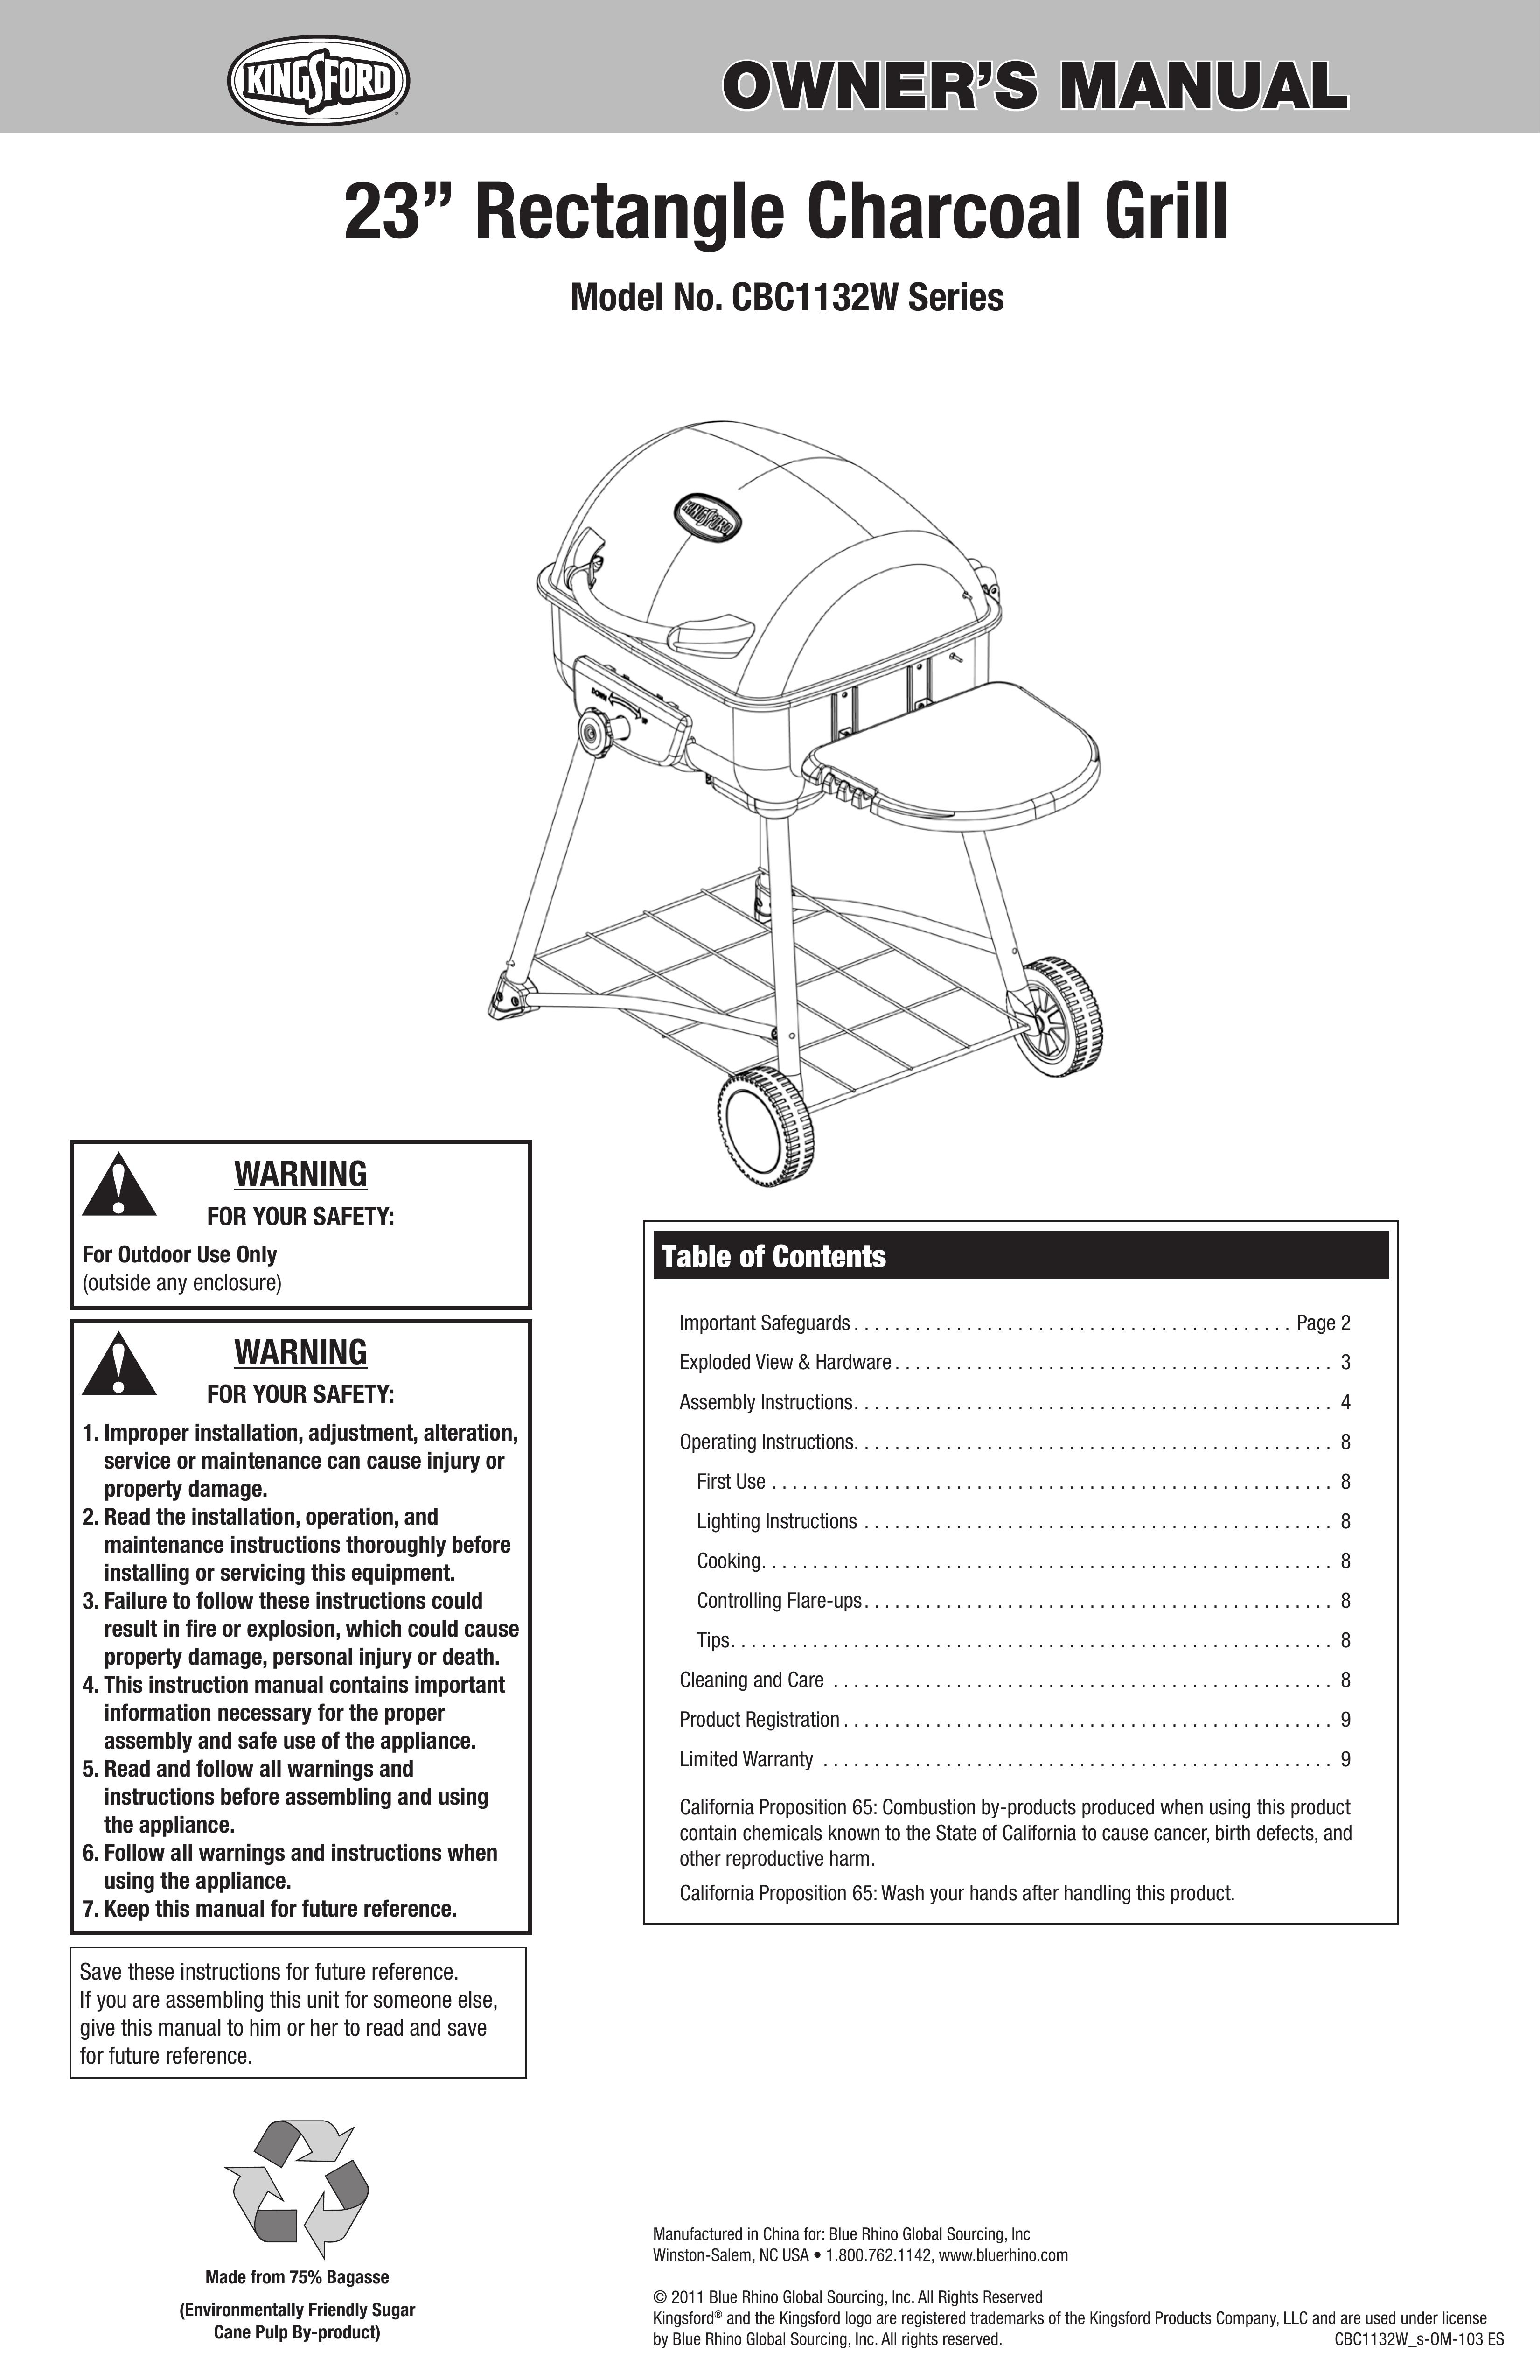 Kingsford CBC1132W Charcoal Grill User Manual